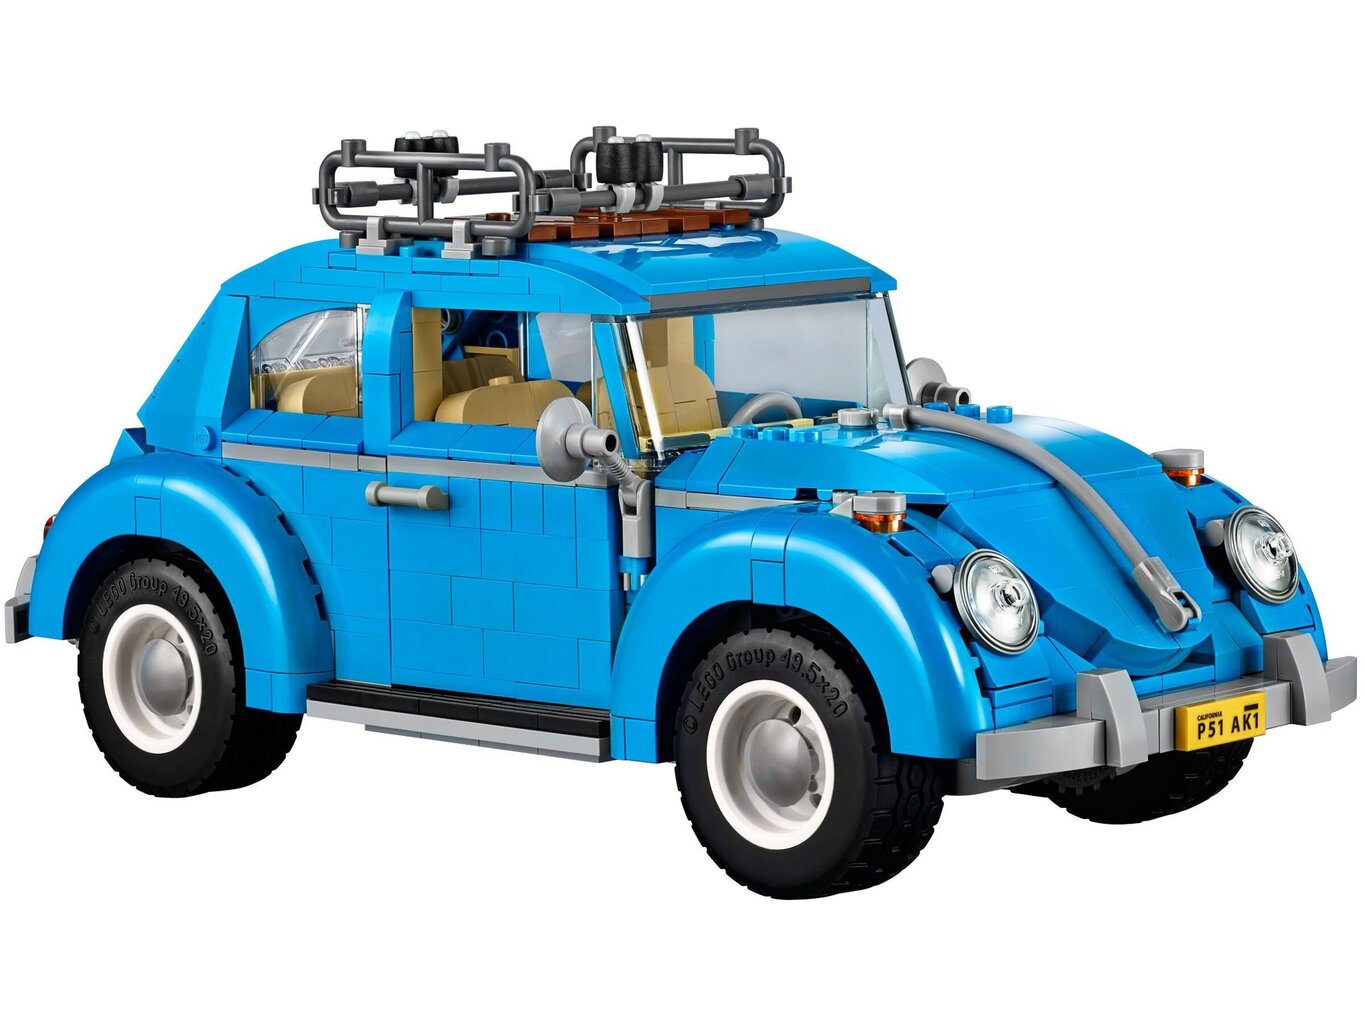 10252 LEGO® Creator Expert Volkswagen Beetle kaina ir informacija | Konstruktoriai ir kaladėlės | pigu.lt